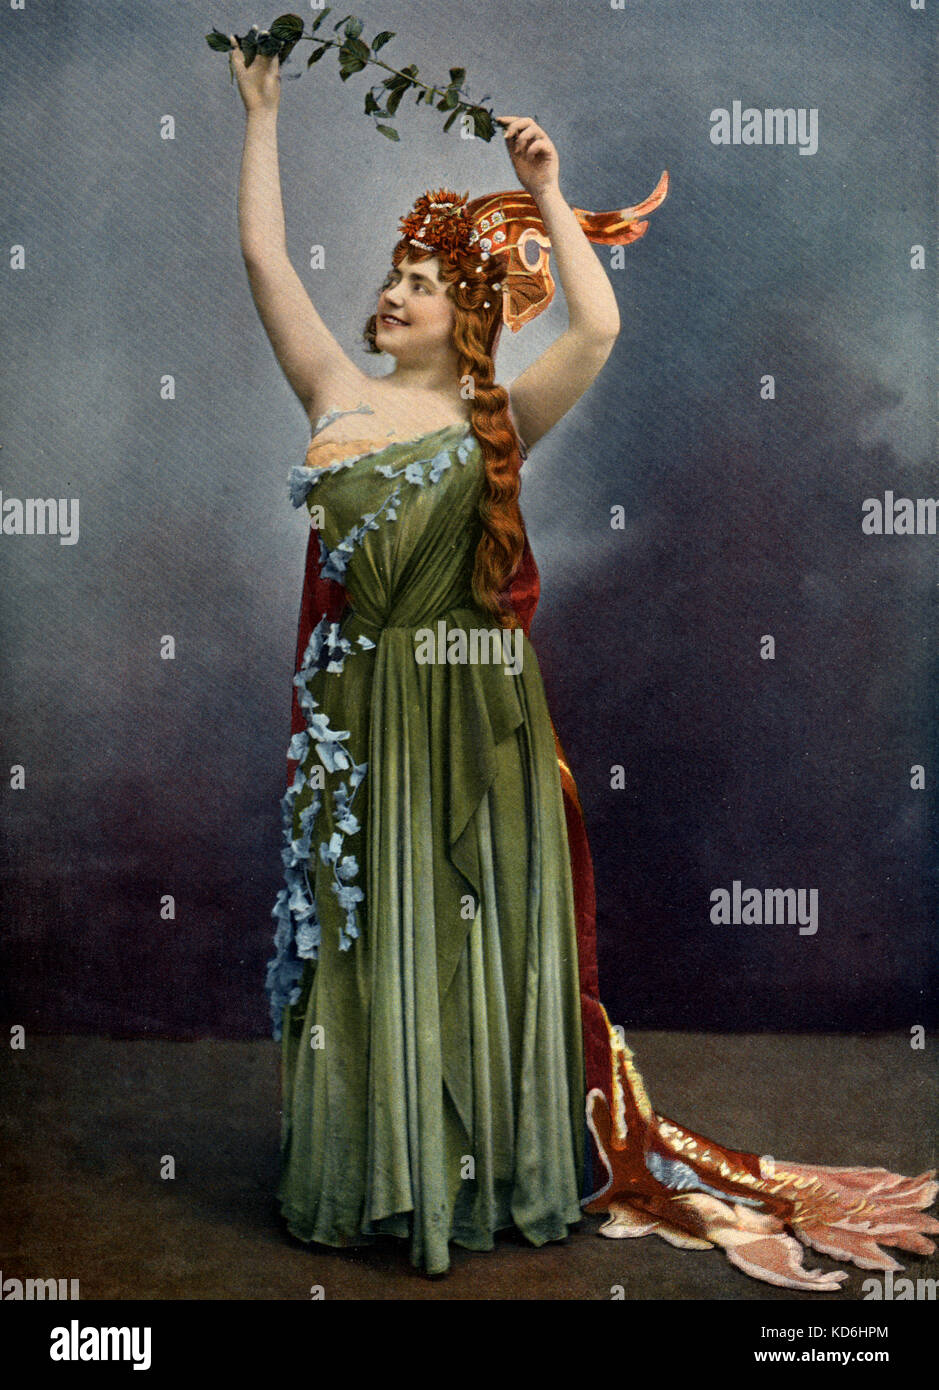 'Cendrillon' (Cinderella) premiere by Massenet in 1899 at the Théatre National de l'Opera-Comique, Paris, with  Bréjean-Gravière as the fairy godmother. Stock Photo